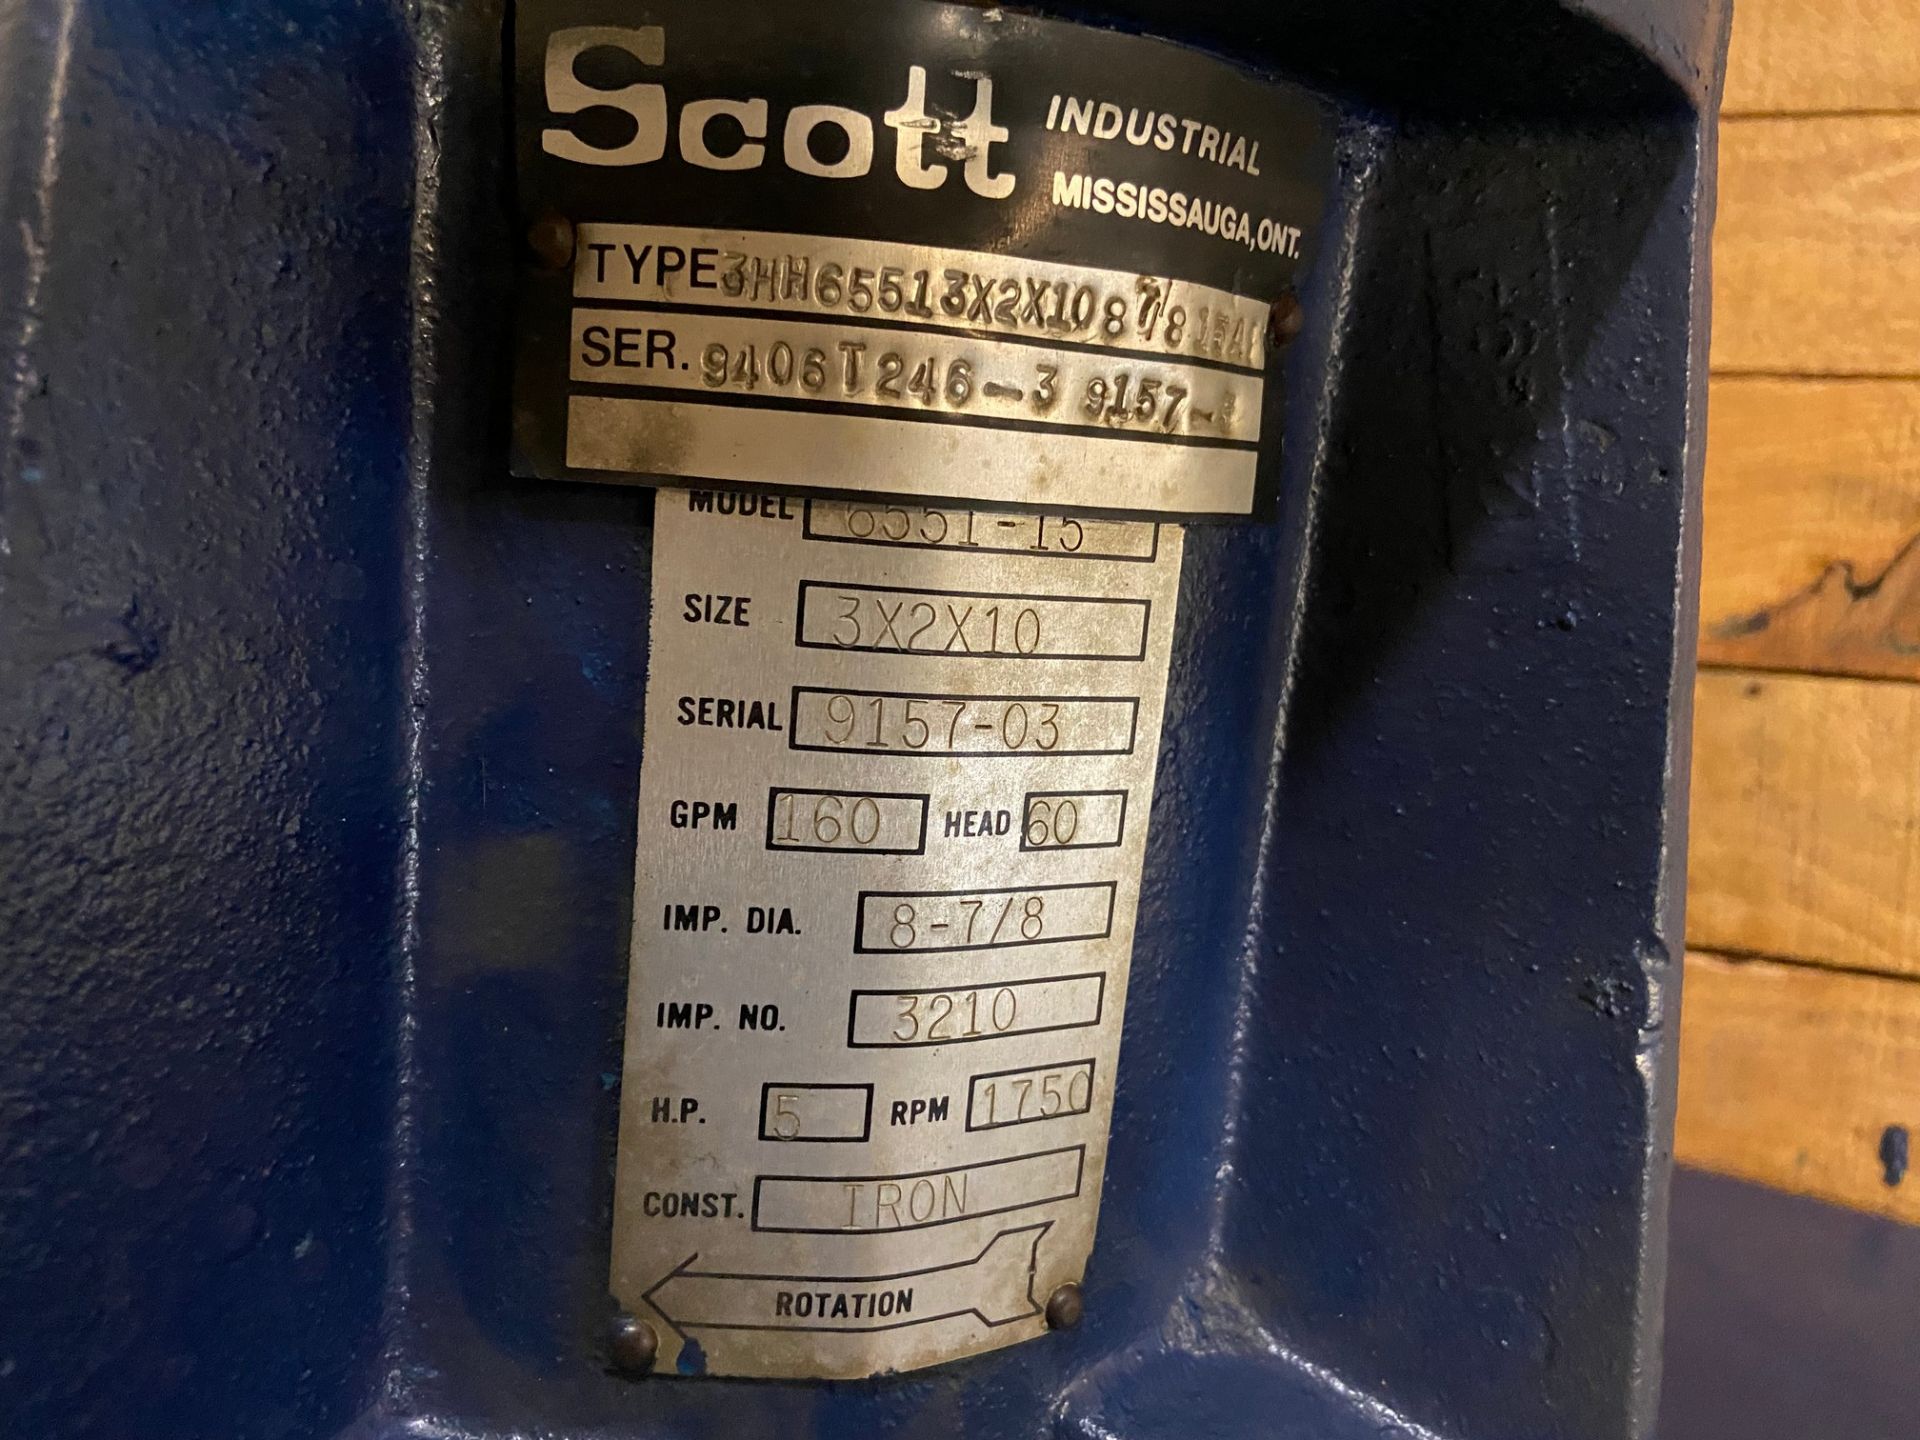 SCOTT MODEL 6551-10 IMPELLER TRANSFER UNIT, 160GPM, 3 X 2 X 10 SIZE, 1750 RPM - Image 4 of 4